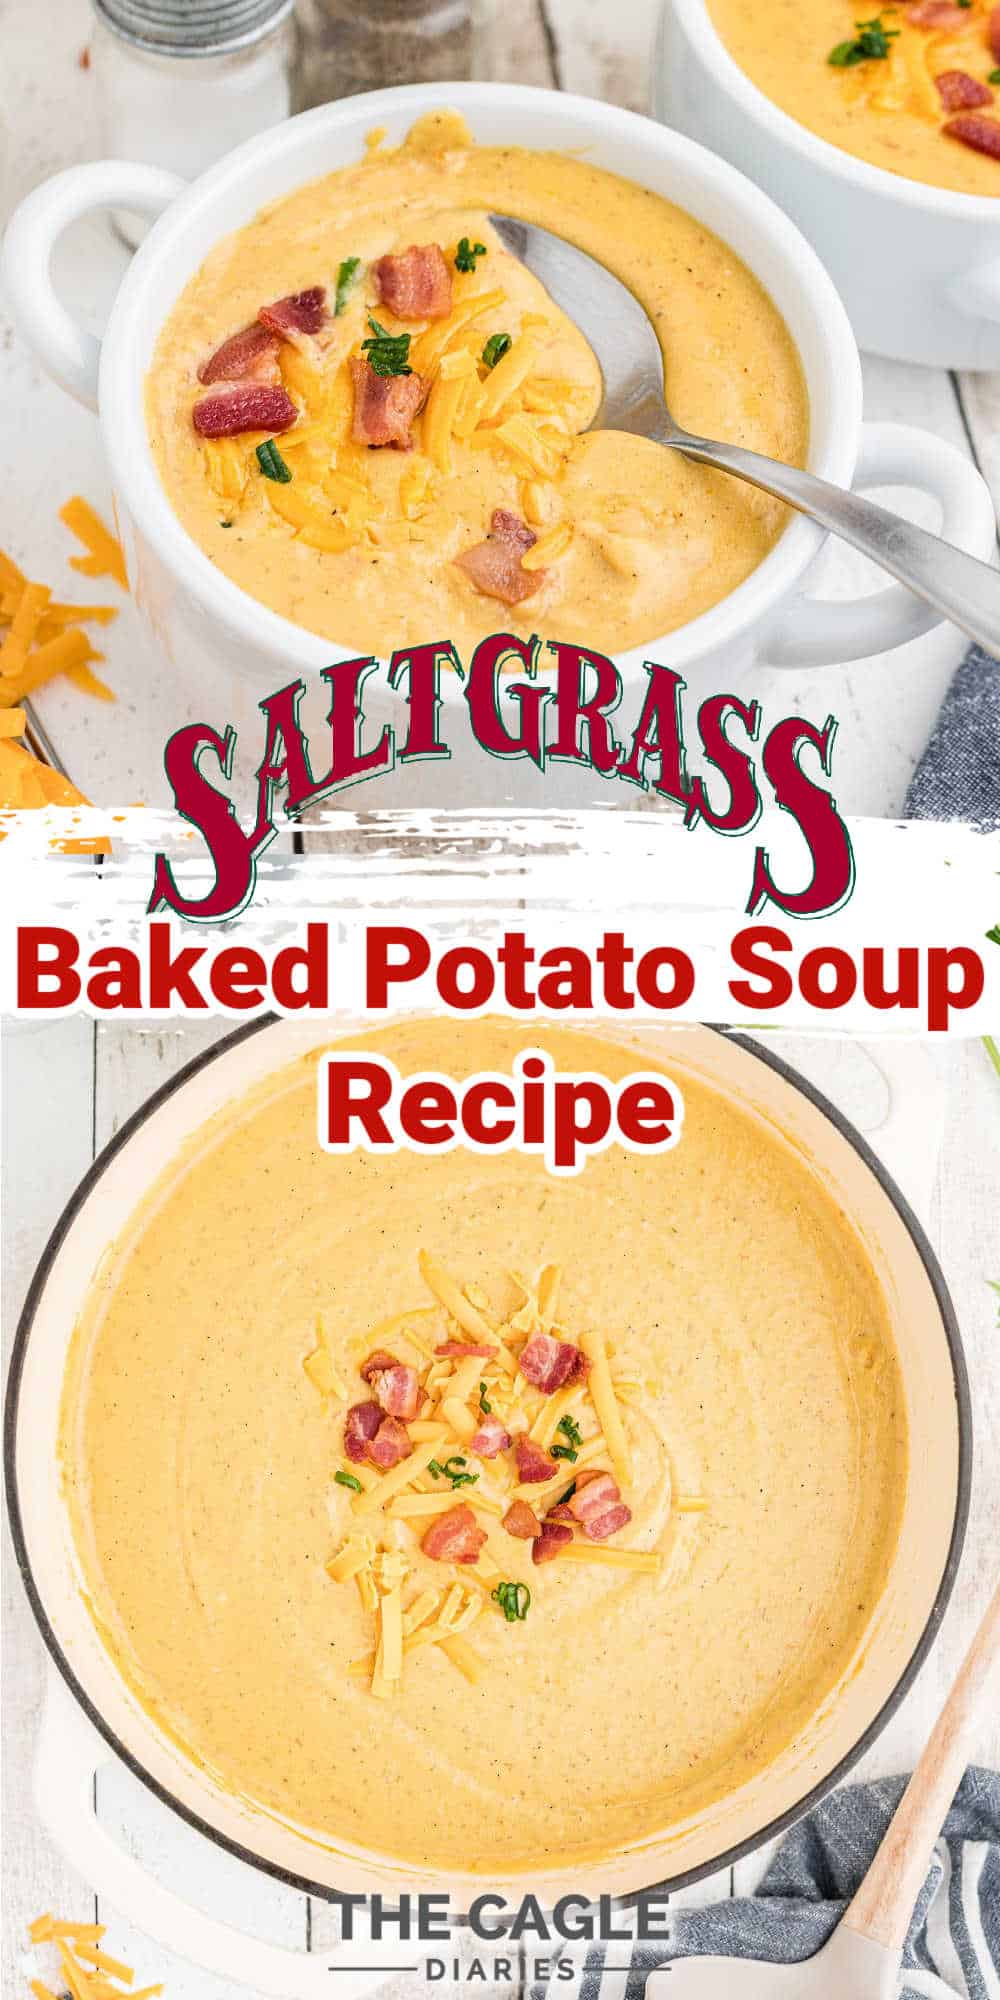 Saltgrass Baked Potato Soup Recipe | The Cagle Diaries